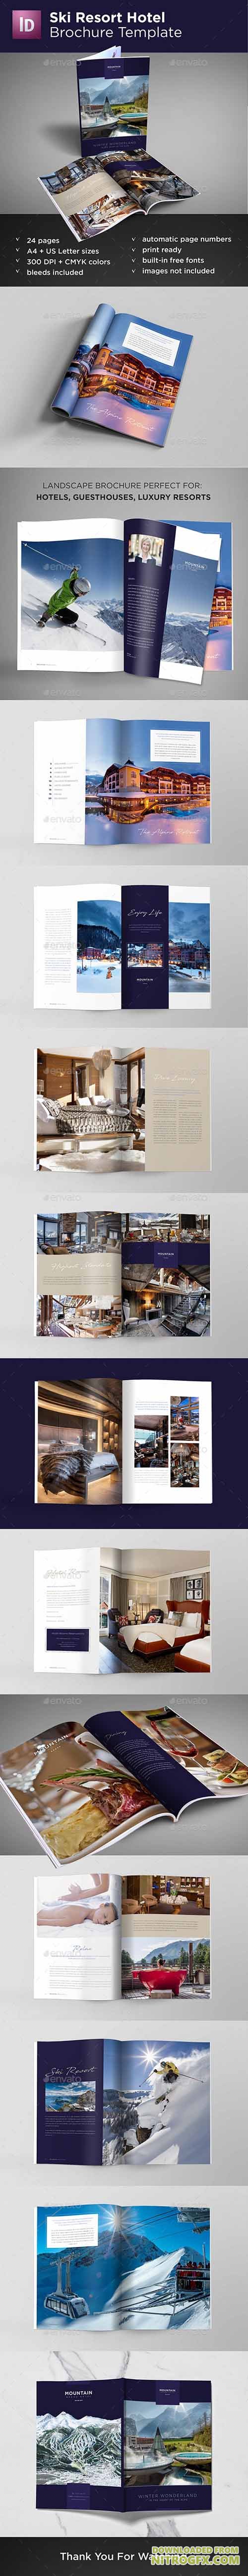 GraphicRiver - Ski Resort Hotel Brochure Template - 20631587